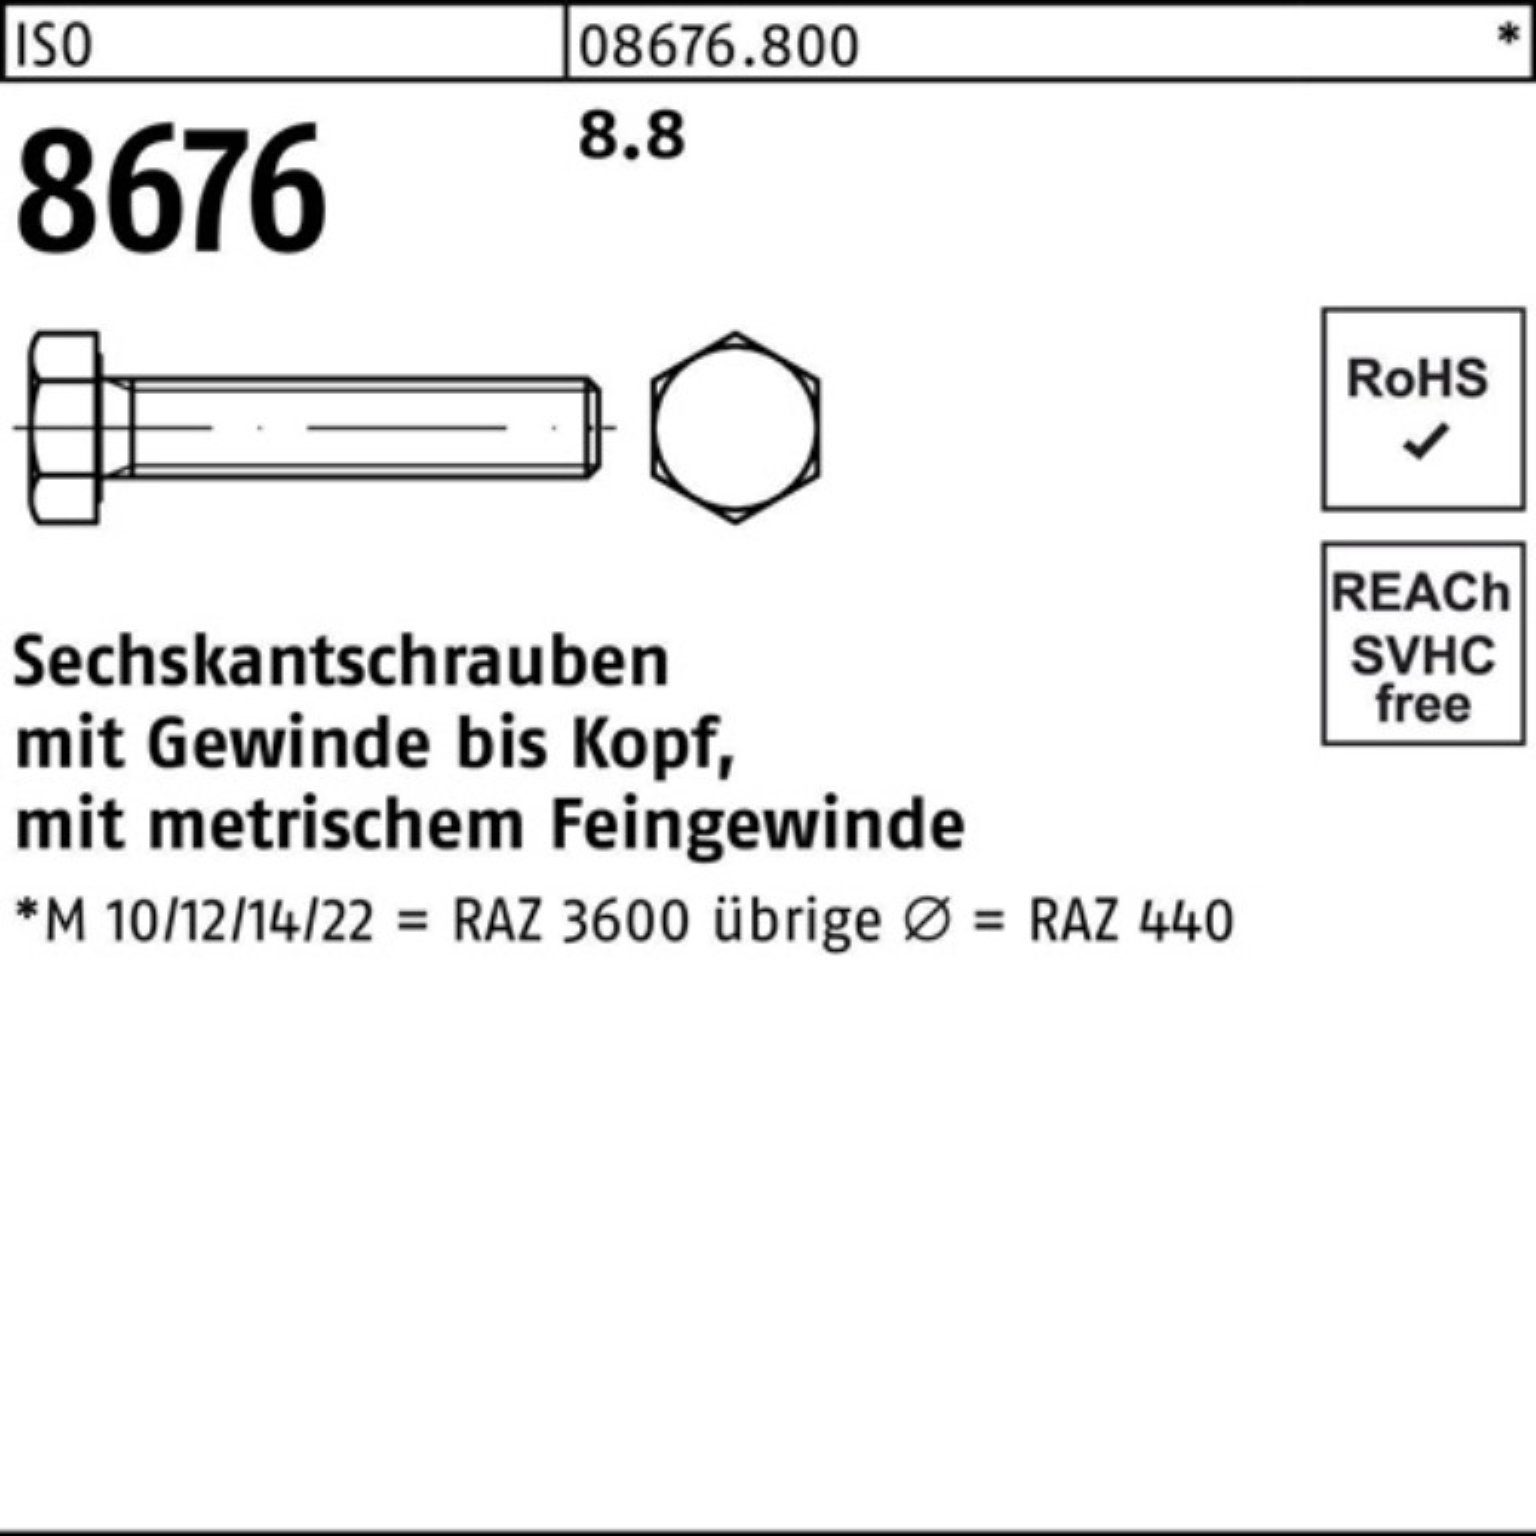 50 VG Reyher Stück 100er Sechskantschraube ISO Pack M14x1,5x 8676 60 8.8 ISO Sechskantschraube